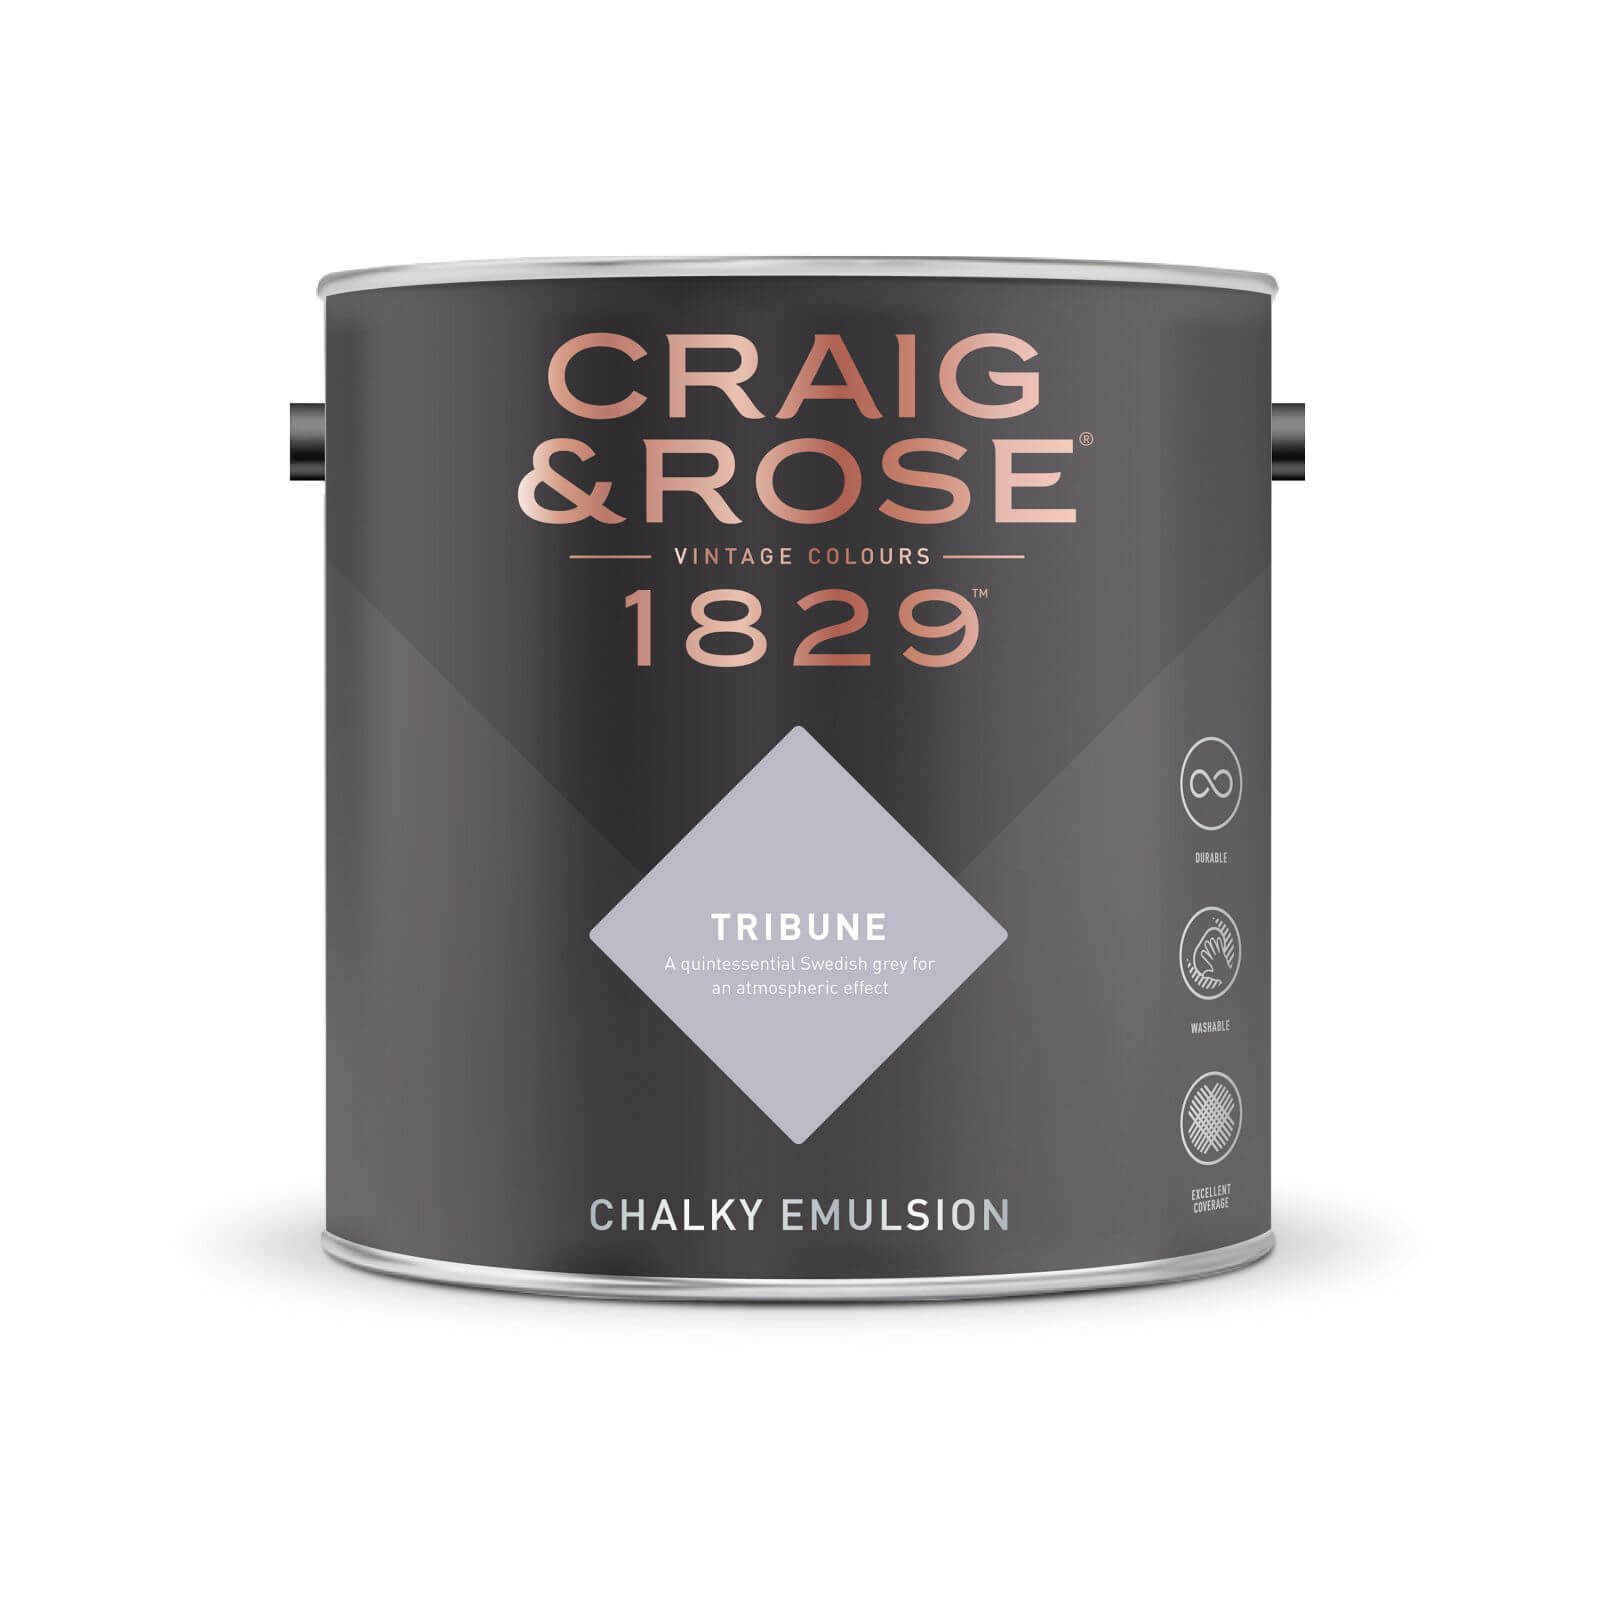 Craig & Rose 1829 Chalky Emulsion Paint Tribune - Tester 50ml